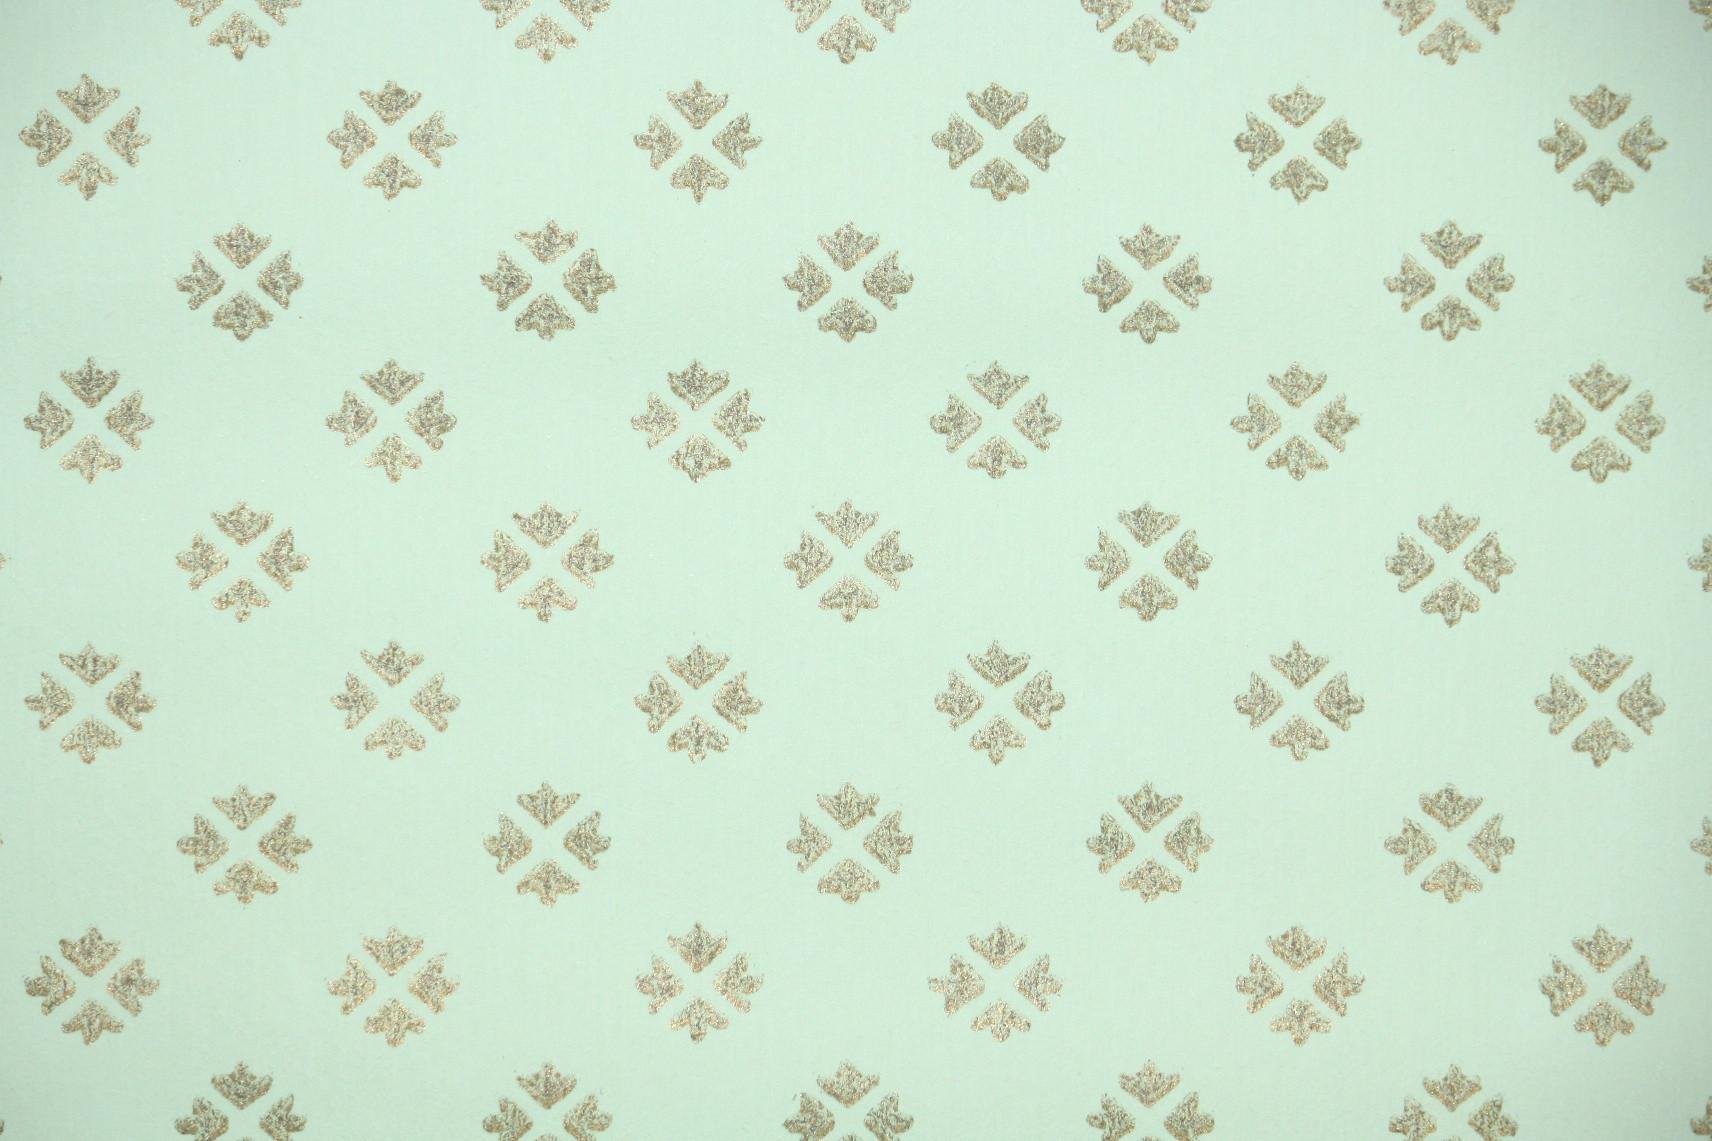 1940s Wallpaper Patterns - 1940s Geometric - HD Wallpaper 